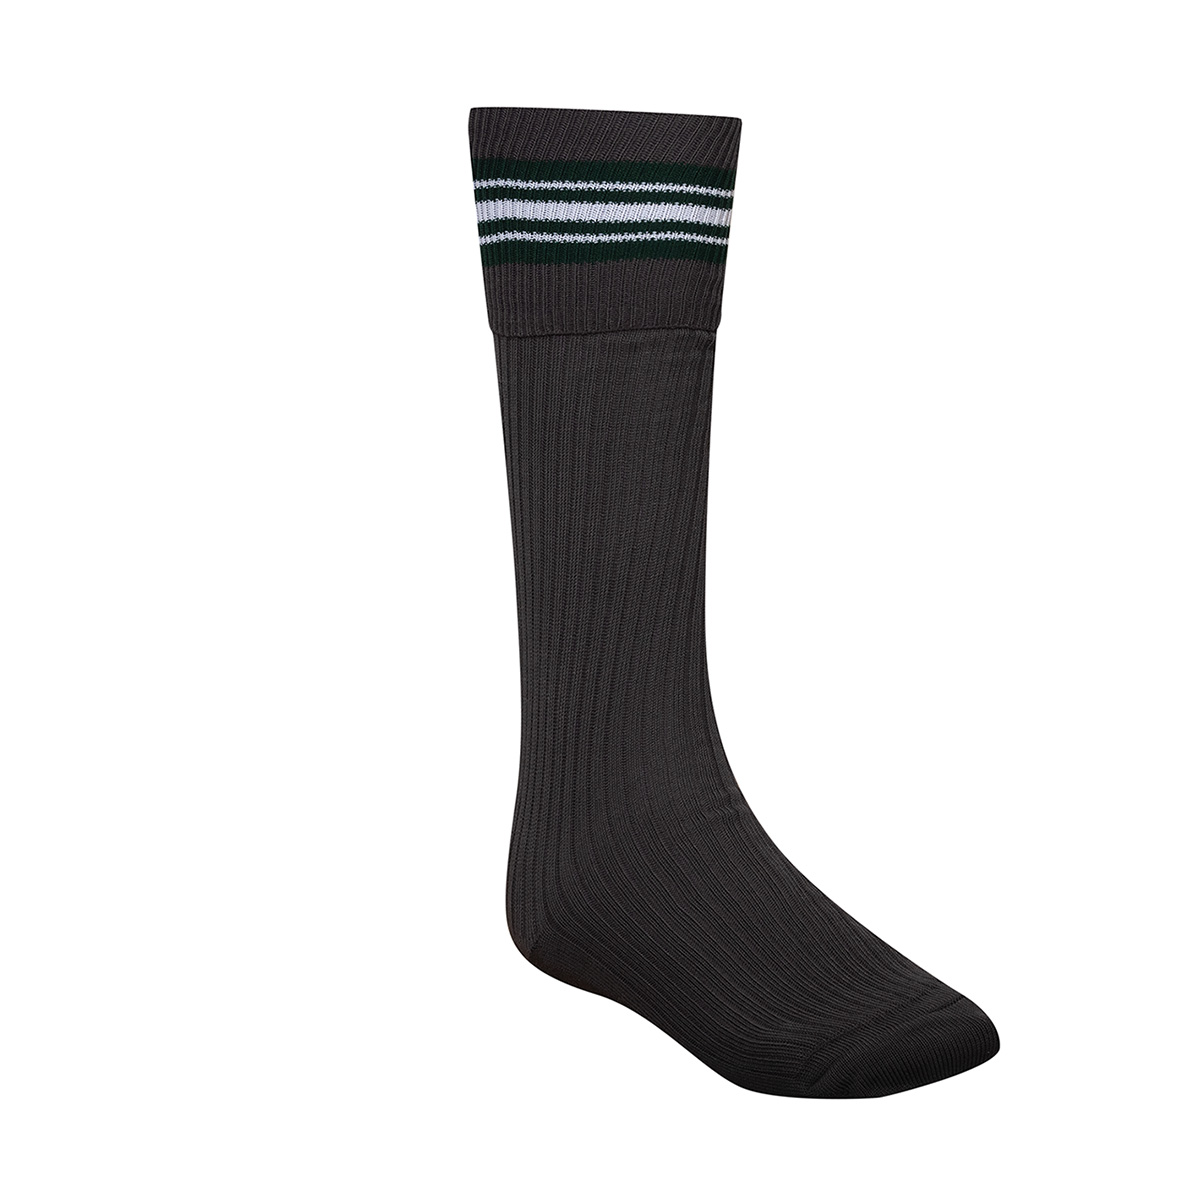 Long Grey Socks - The Gap State High P&C Uniform Shop